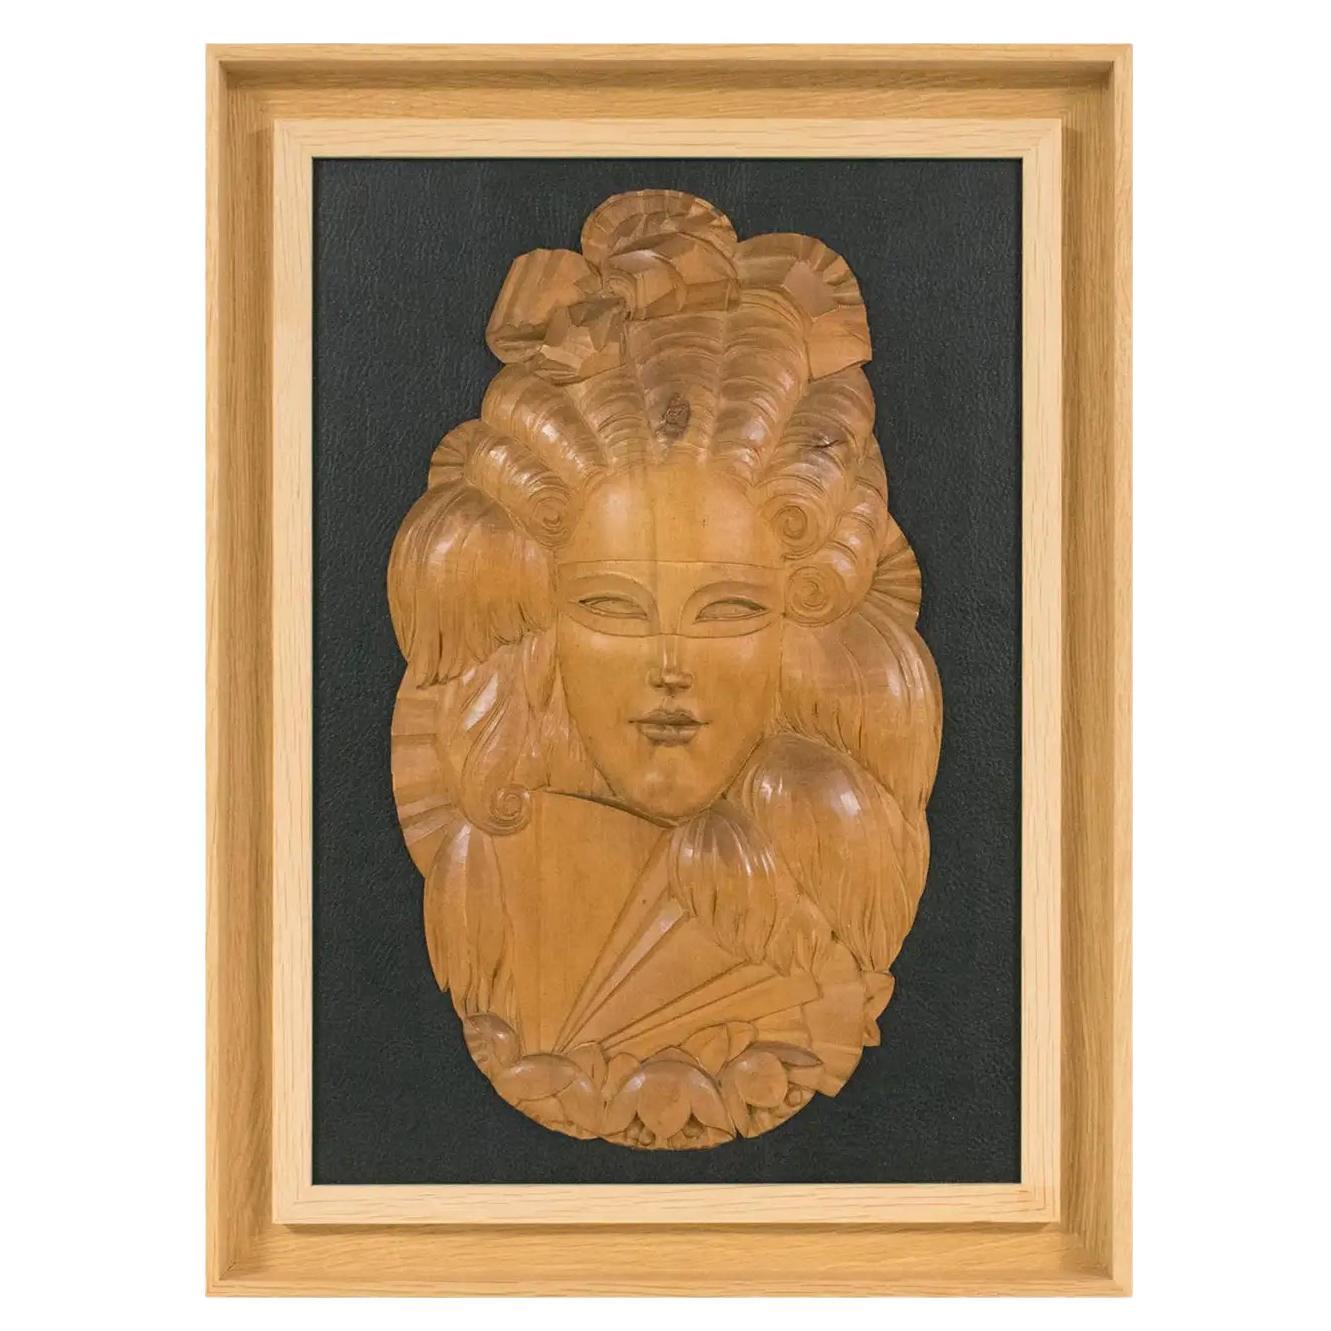 Art Deco Handcrafted Wood Panel Wall Sculpture Venetian Mask